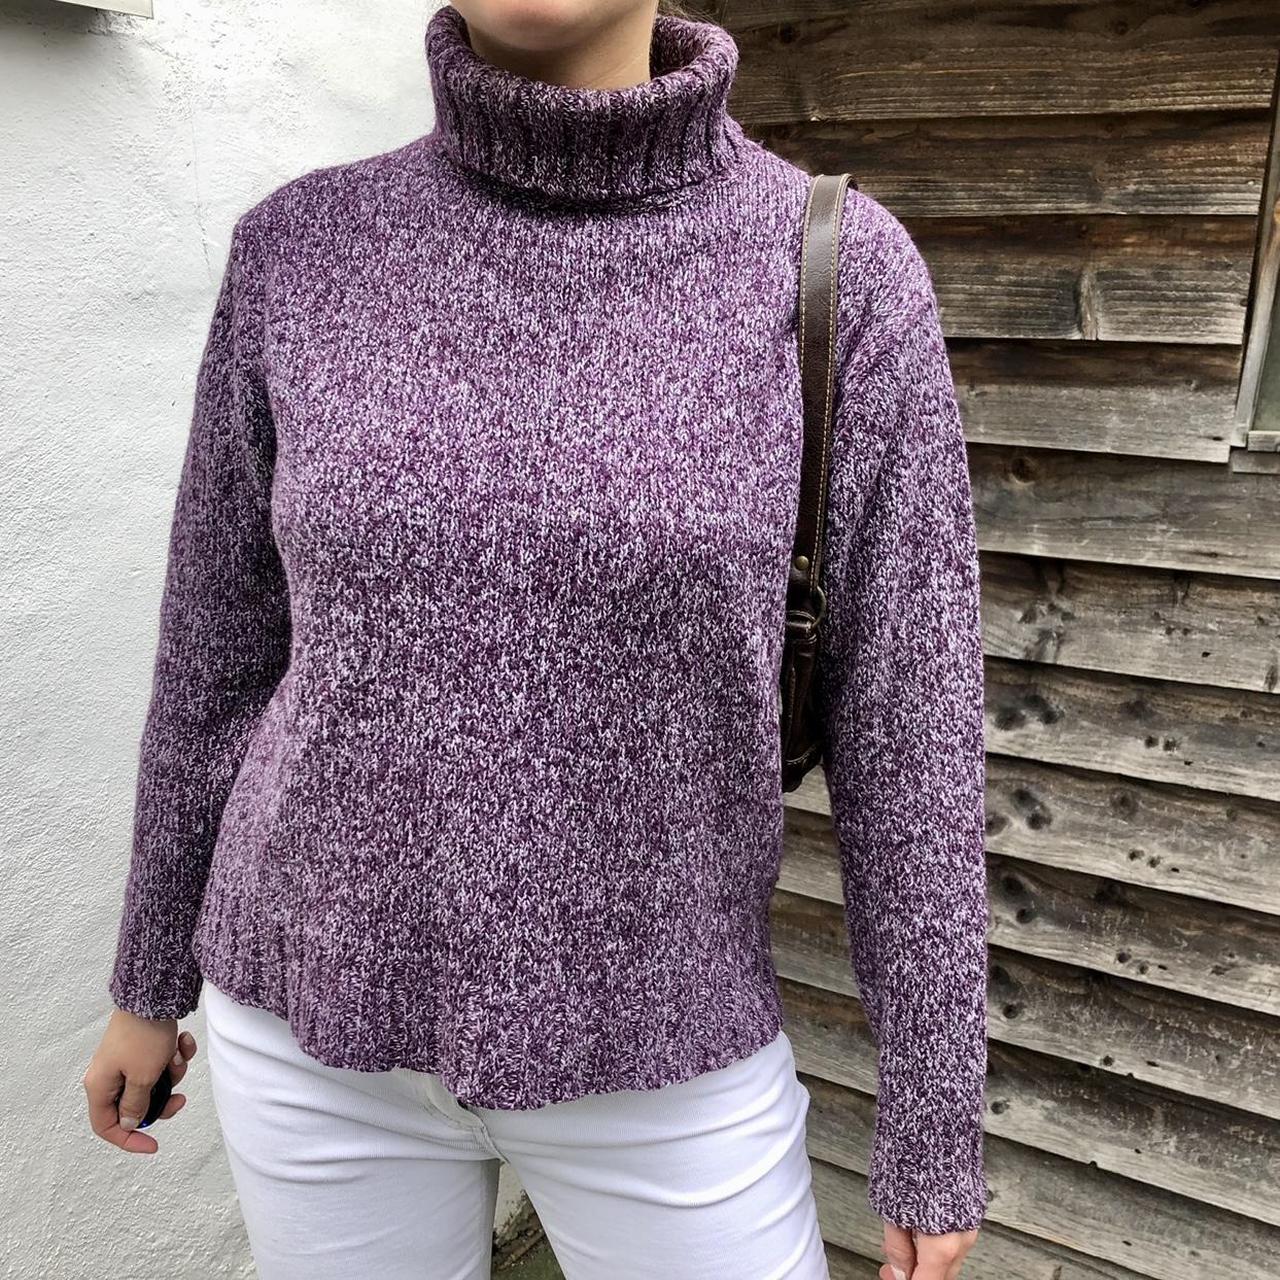 Vintage turtleneck purple jumper sweater. Dark... - Depop